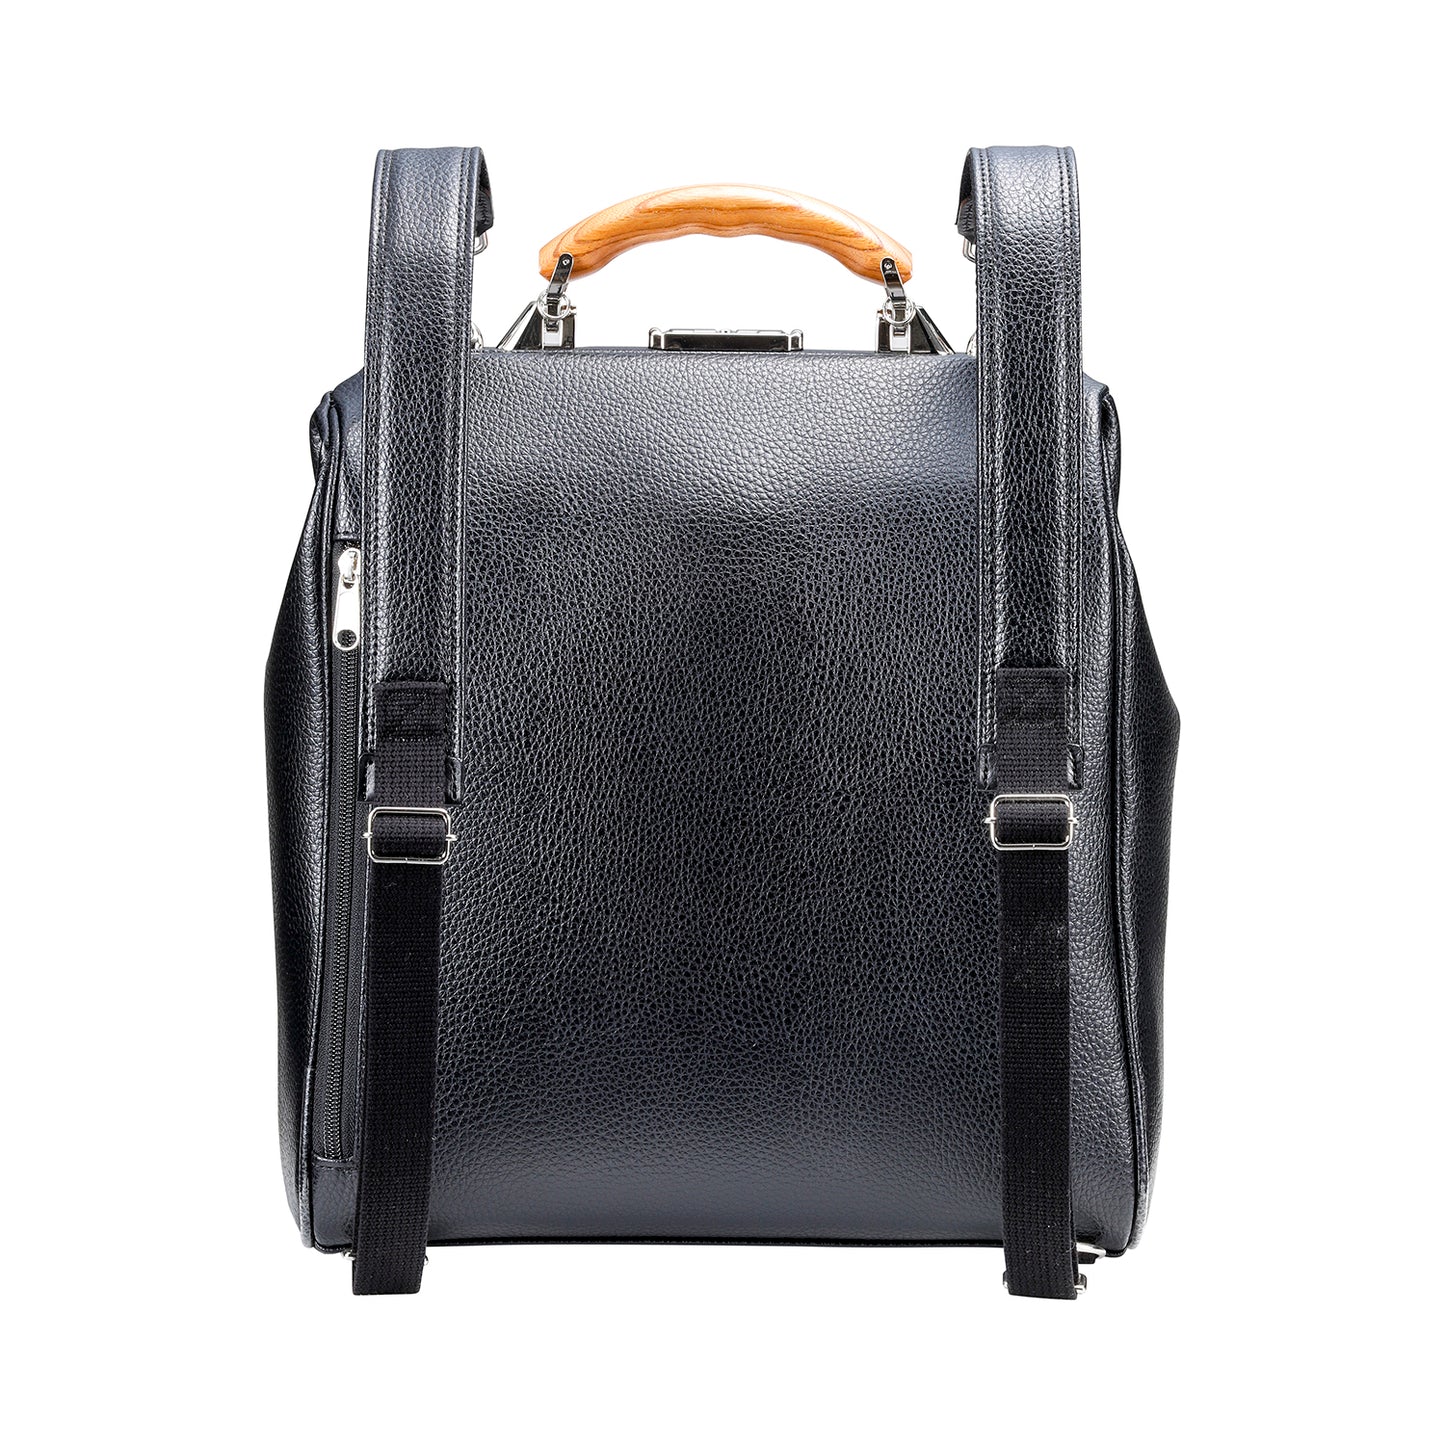 ◆Toyooka Bags Certified [Bag Bones SET] Dulles Bag with Genuine Leather Included, M Size, YK3ME [ELK] Black